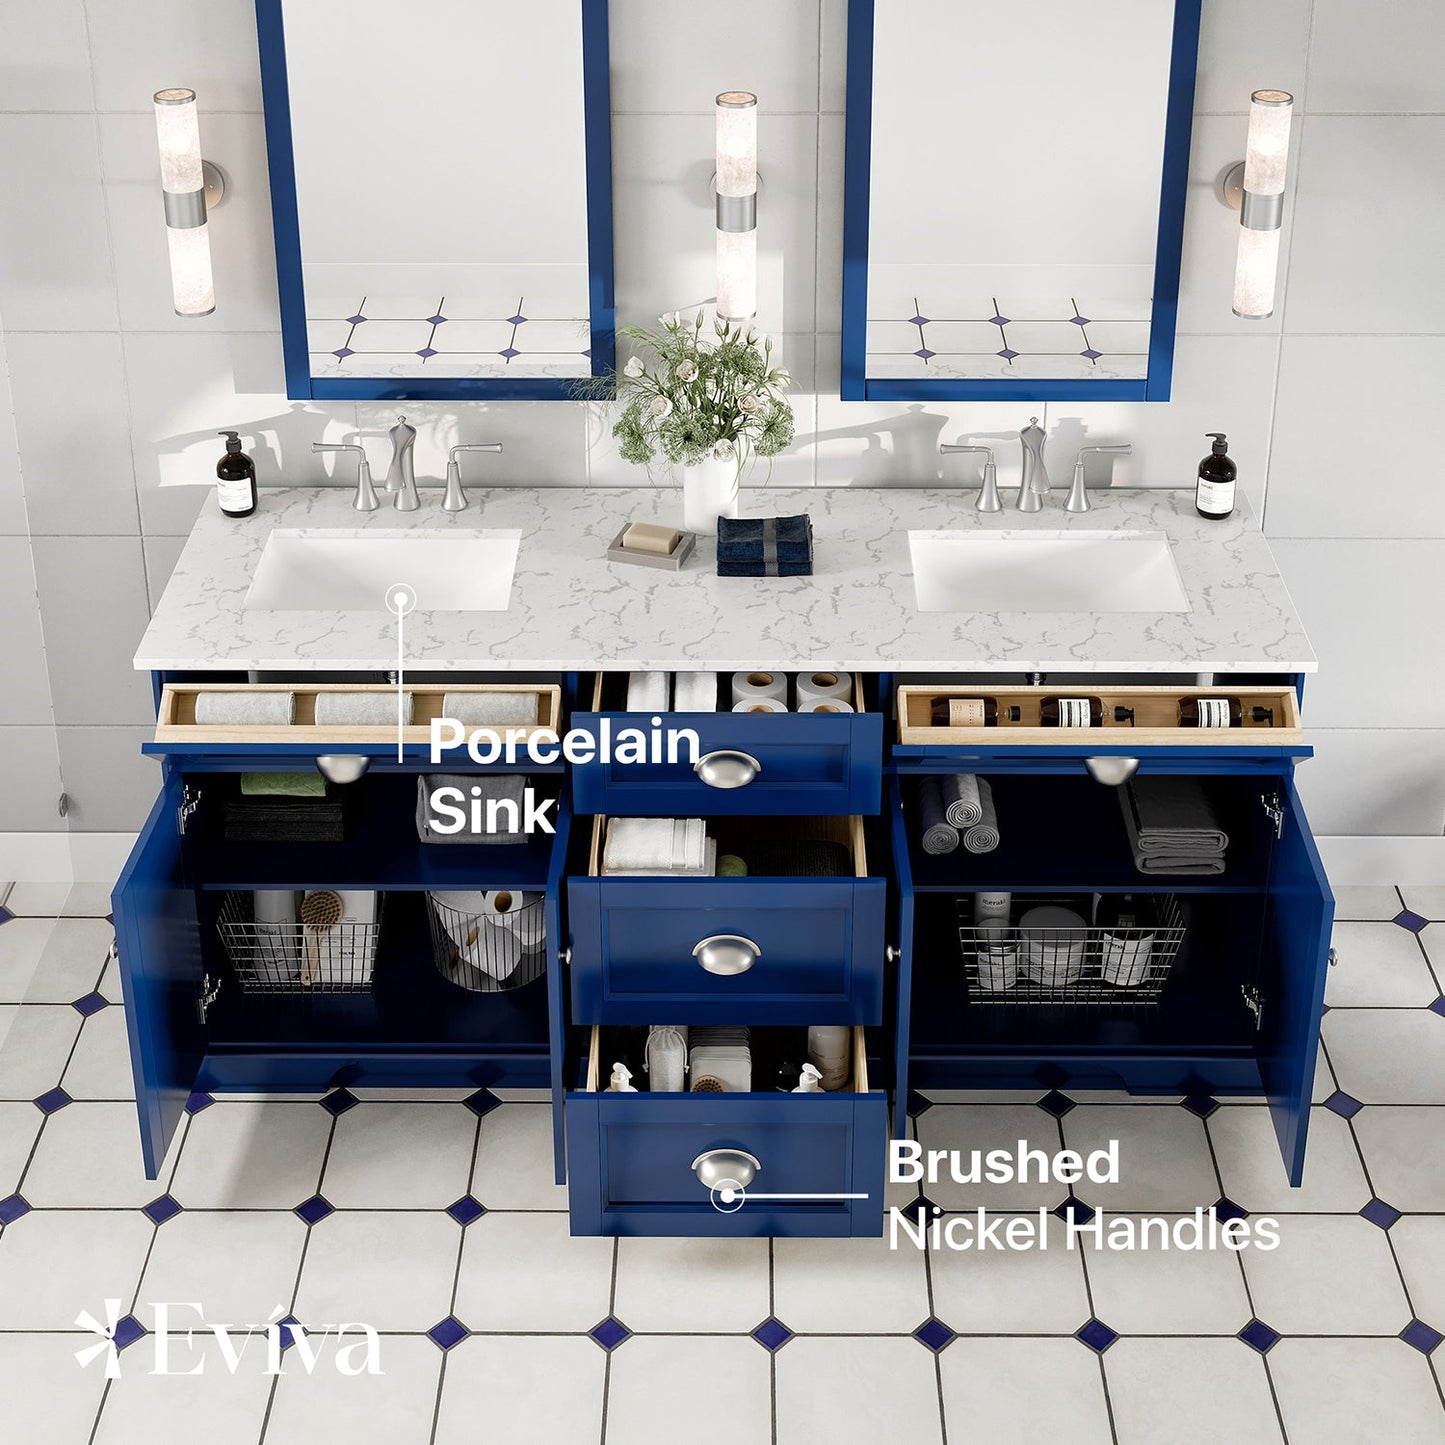 Eviva Epic Transitional Blue Bathroom Vanity